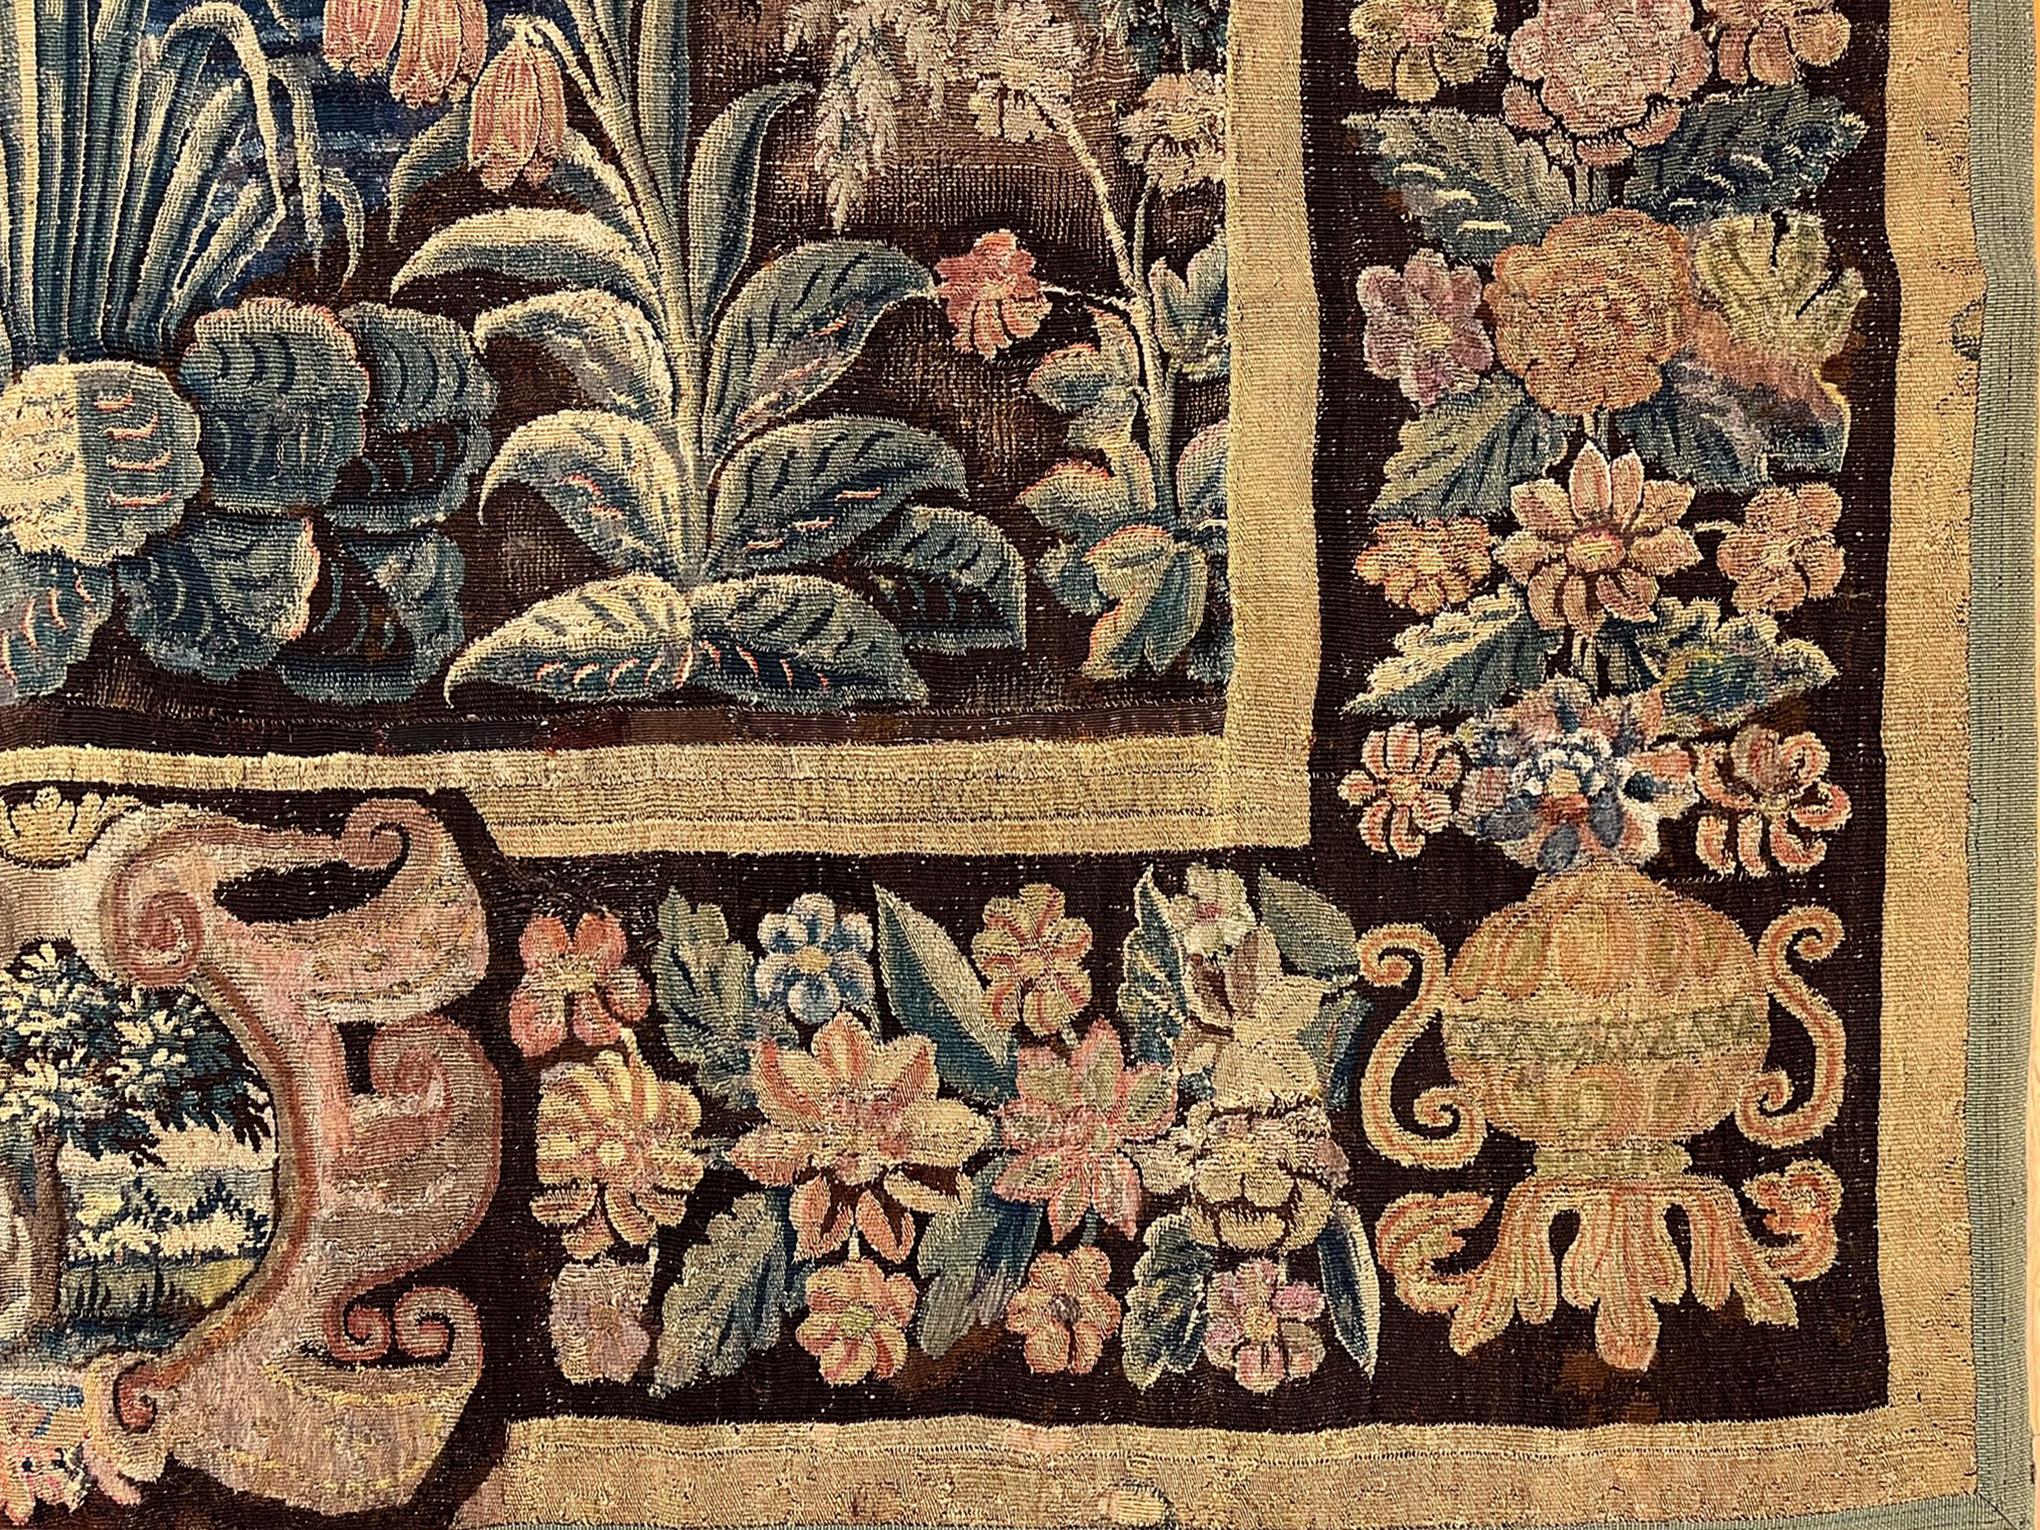 Hand-Woven 17th Century Flemish Verdure Landscape Tapestry, a Lush Forest & Pendant Border For Sale